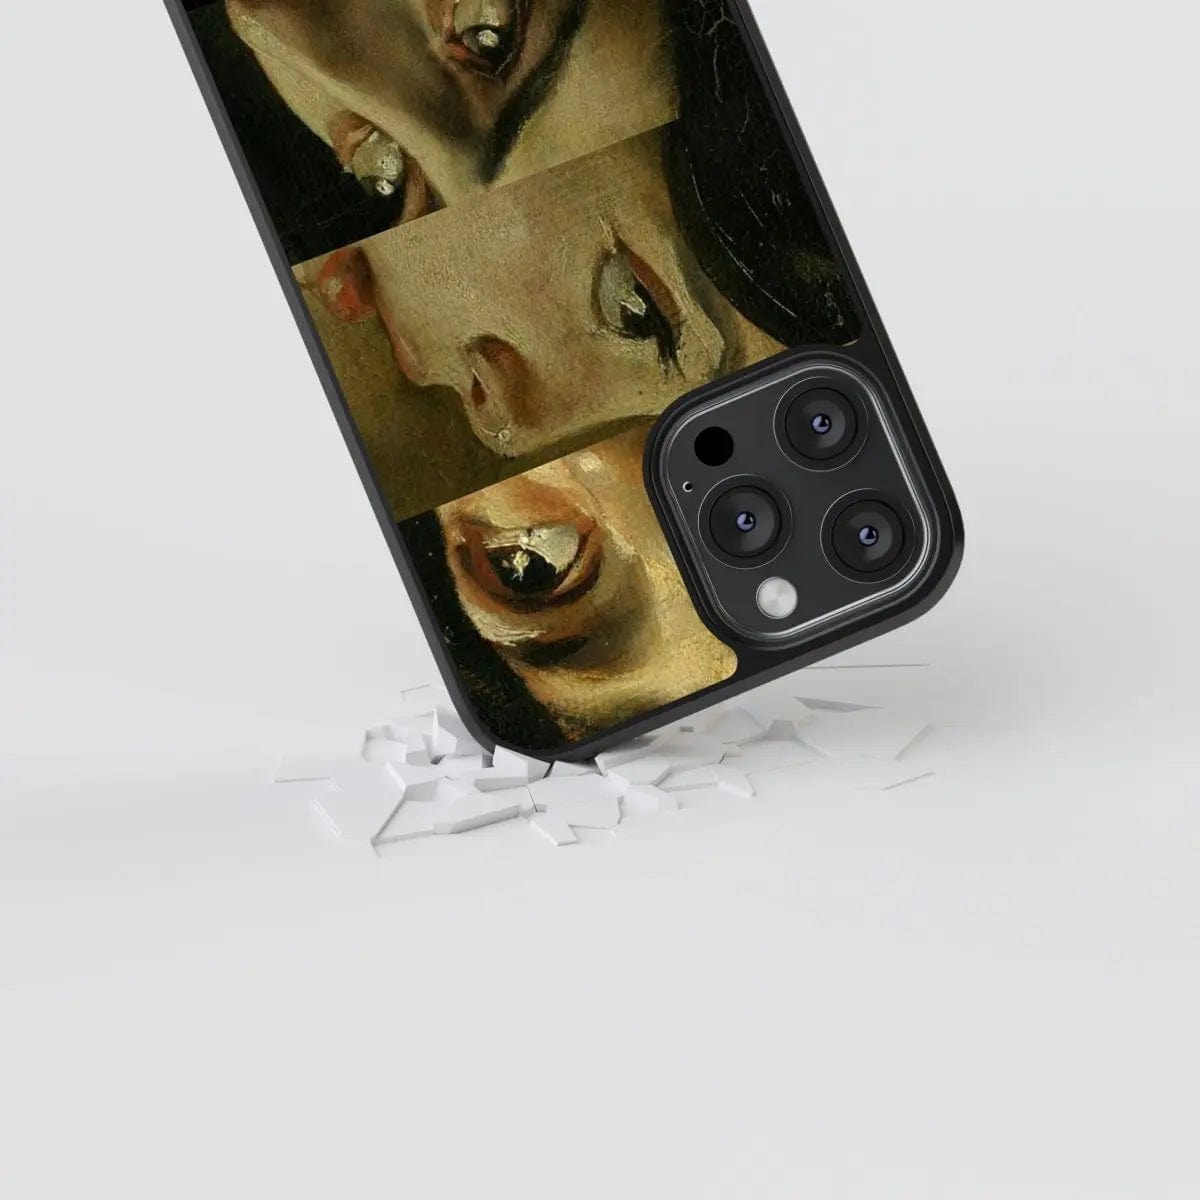 Phone case "Tears" - Artcase